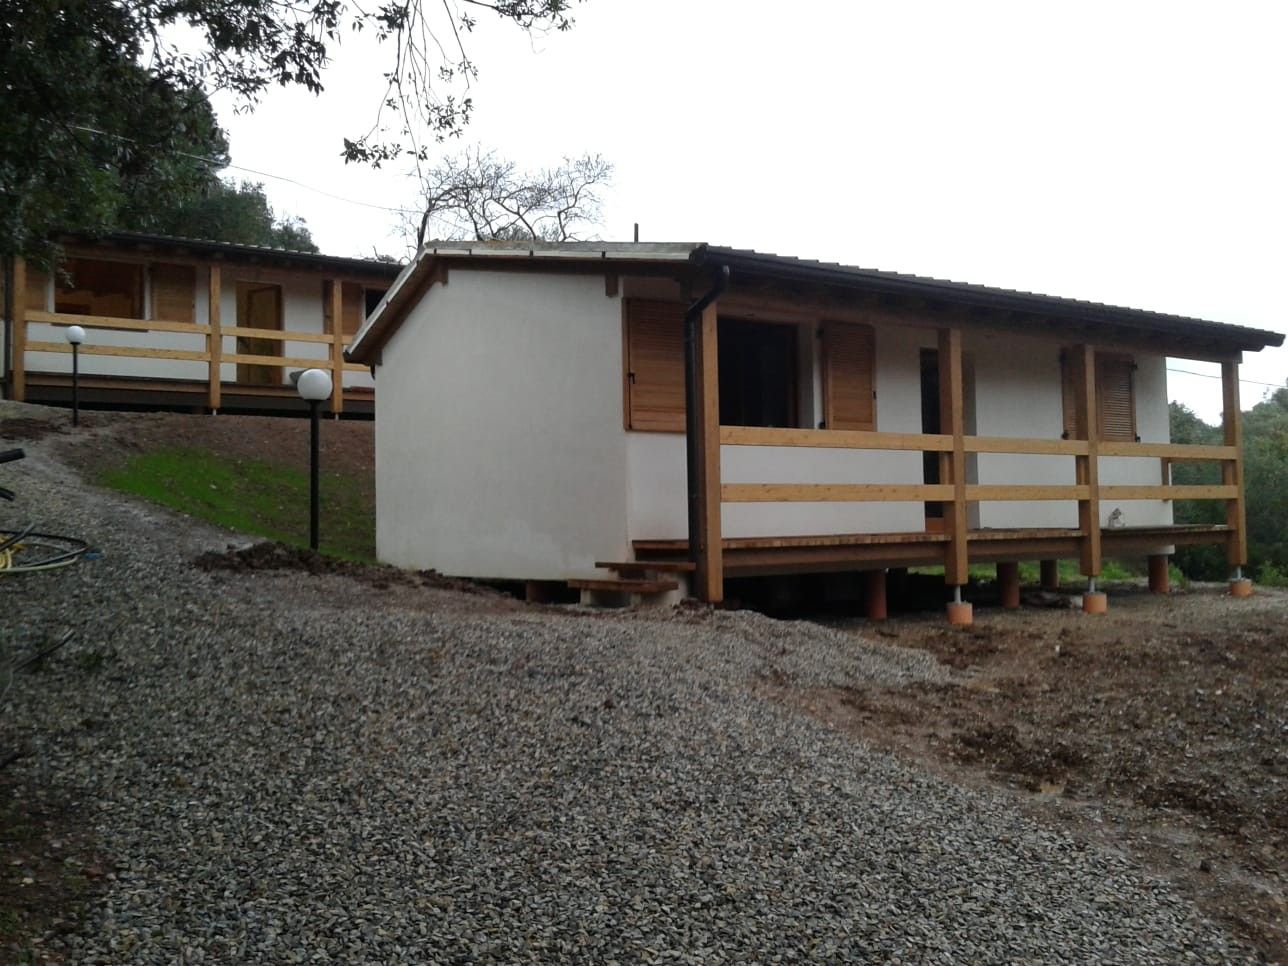 Case in legno Bergamasca Costruzioni Legno Case Vacanza struttura a Telaio (Timber Frame)